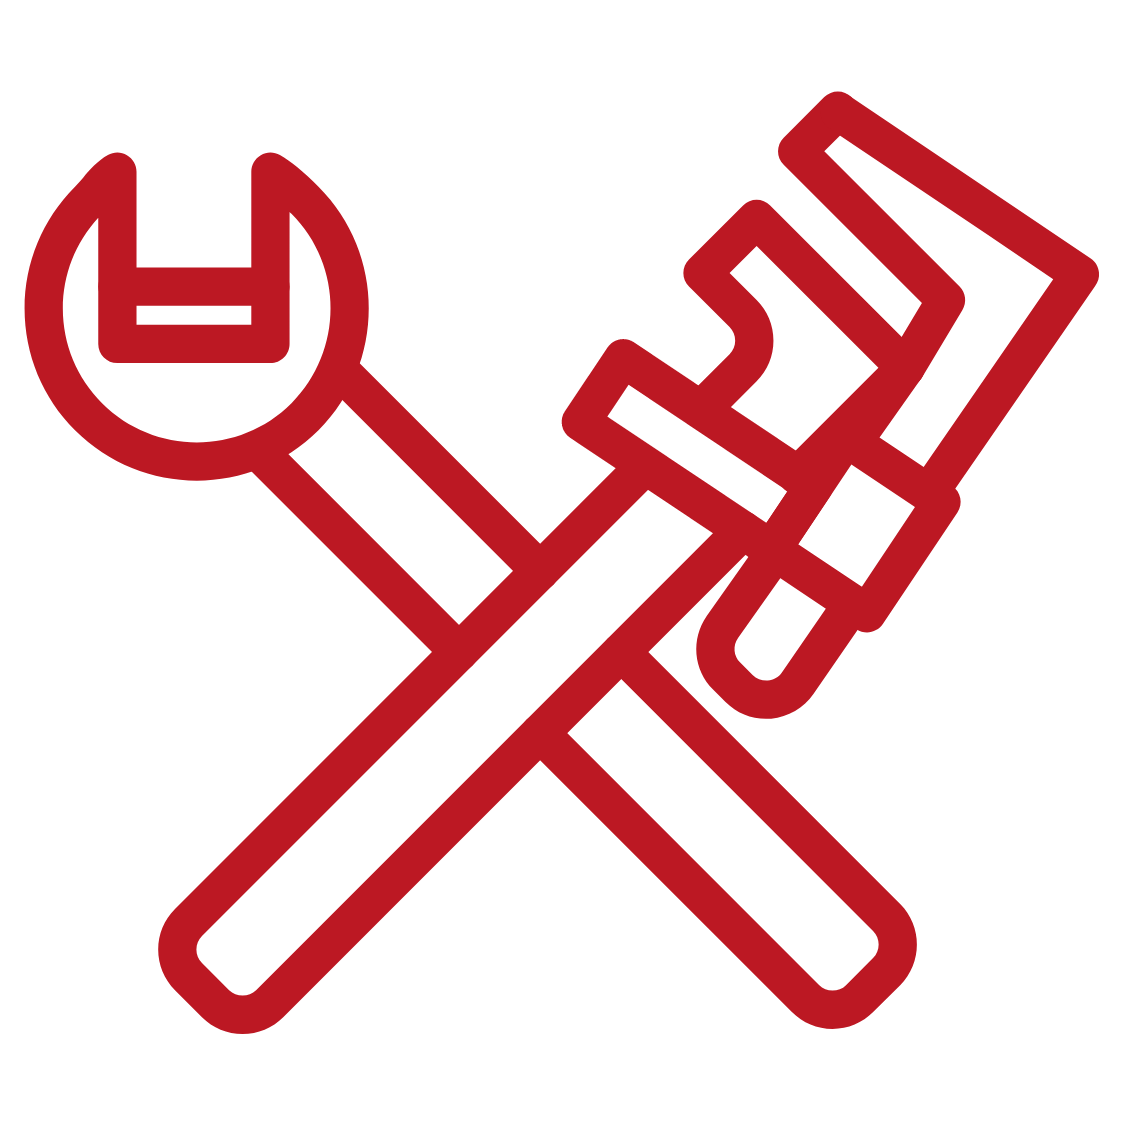 plumbing maintenance icon